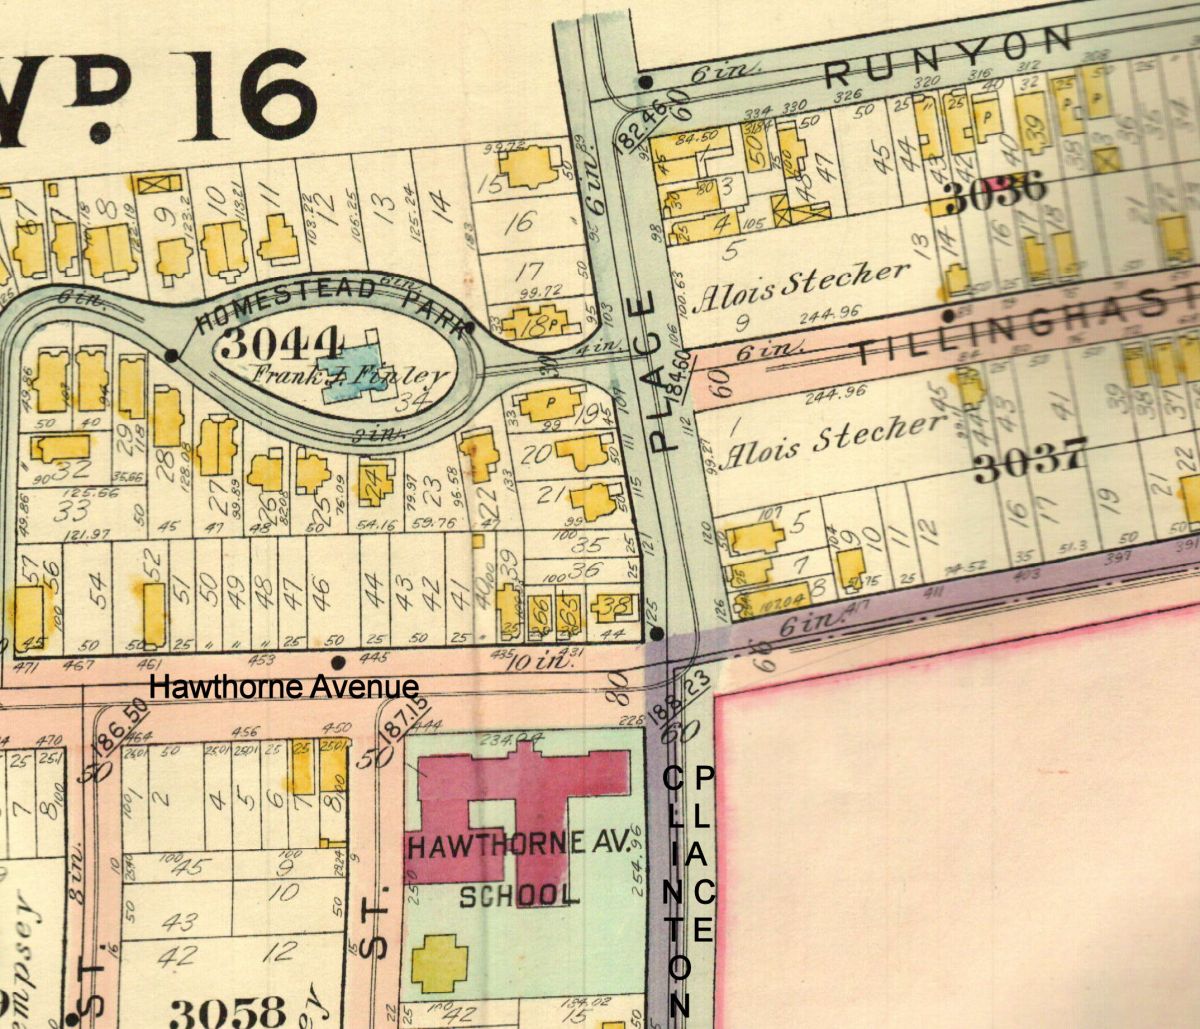 Homestead Park
1911 Map
